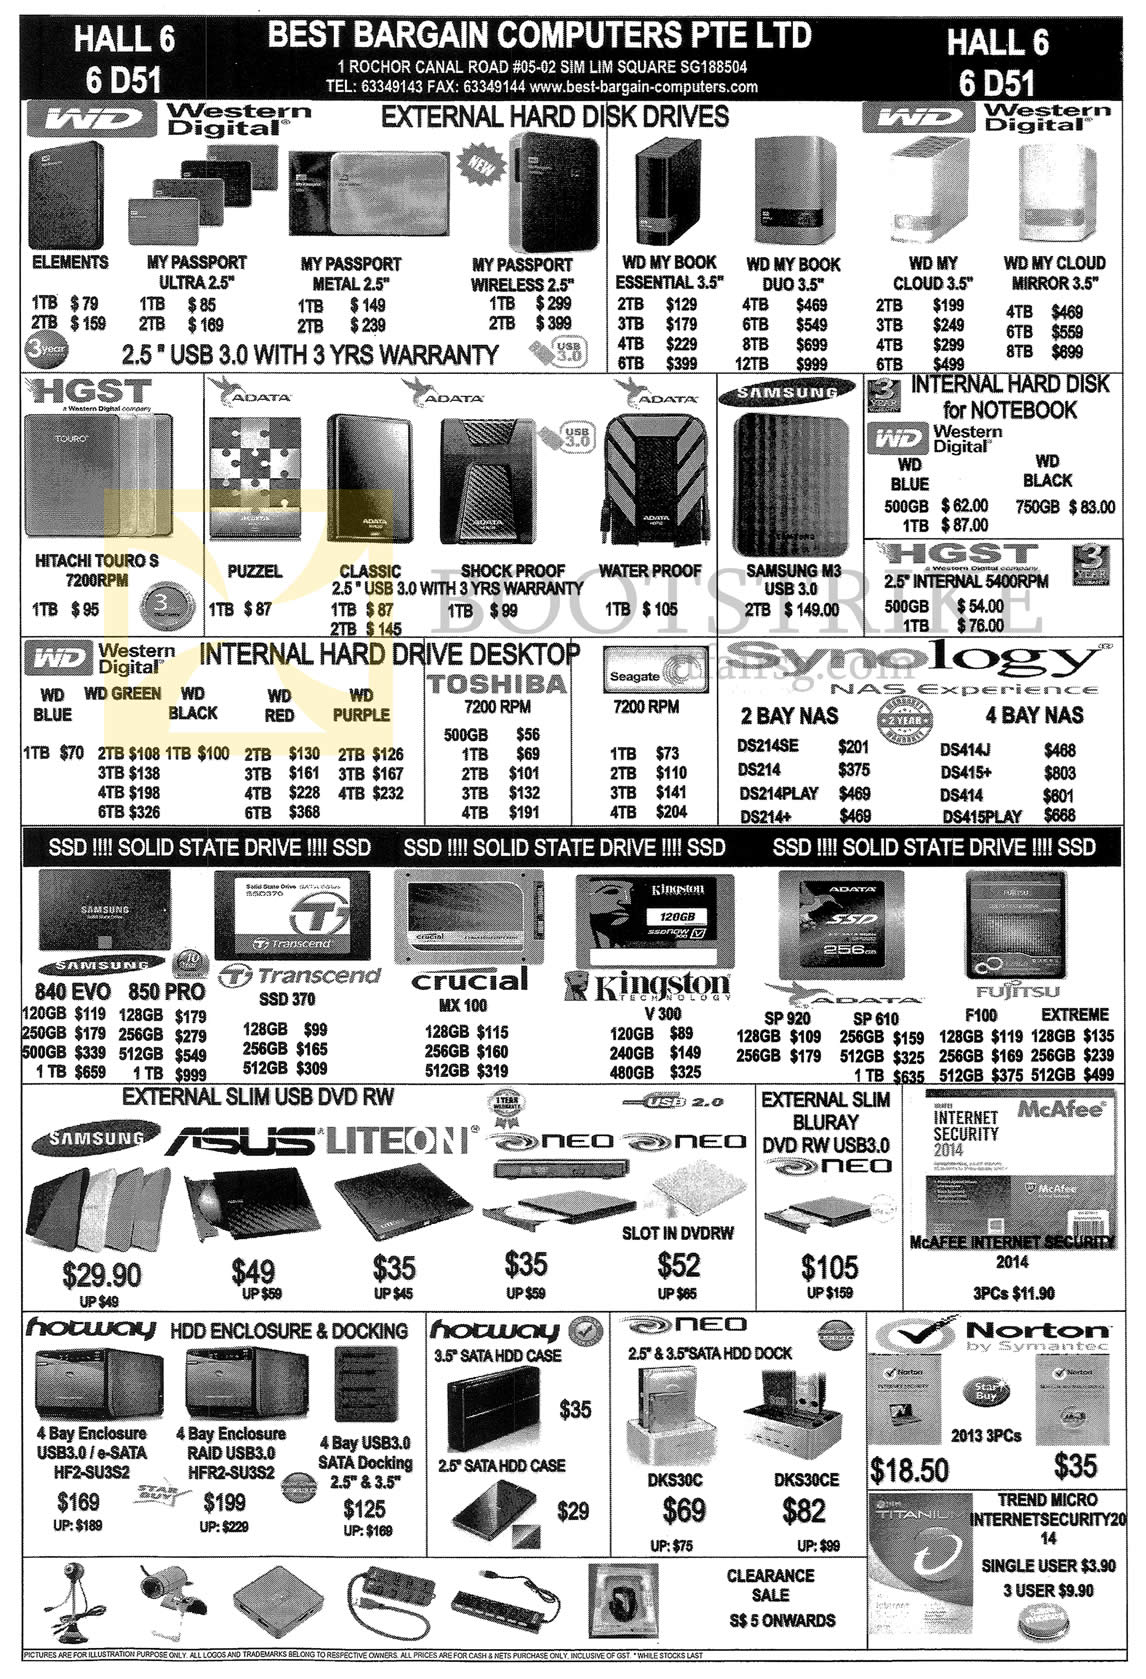 SITEX 2014 price list image brochure of Best Bargain Computers External Hard Disk Drives, Internal Hard Drives, External Slim USB DVD RW, External Slim Blu Ray, Enclosure, SSD, Crucial, Transend, Samsung